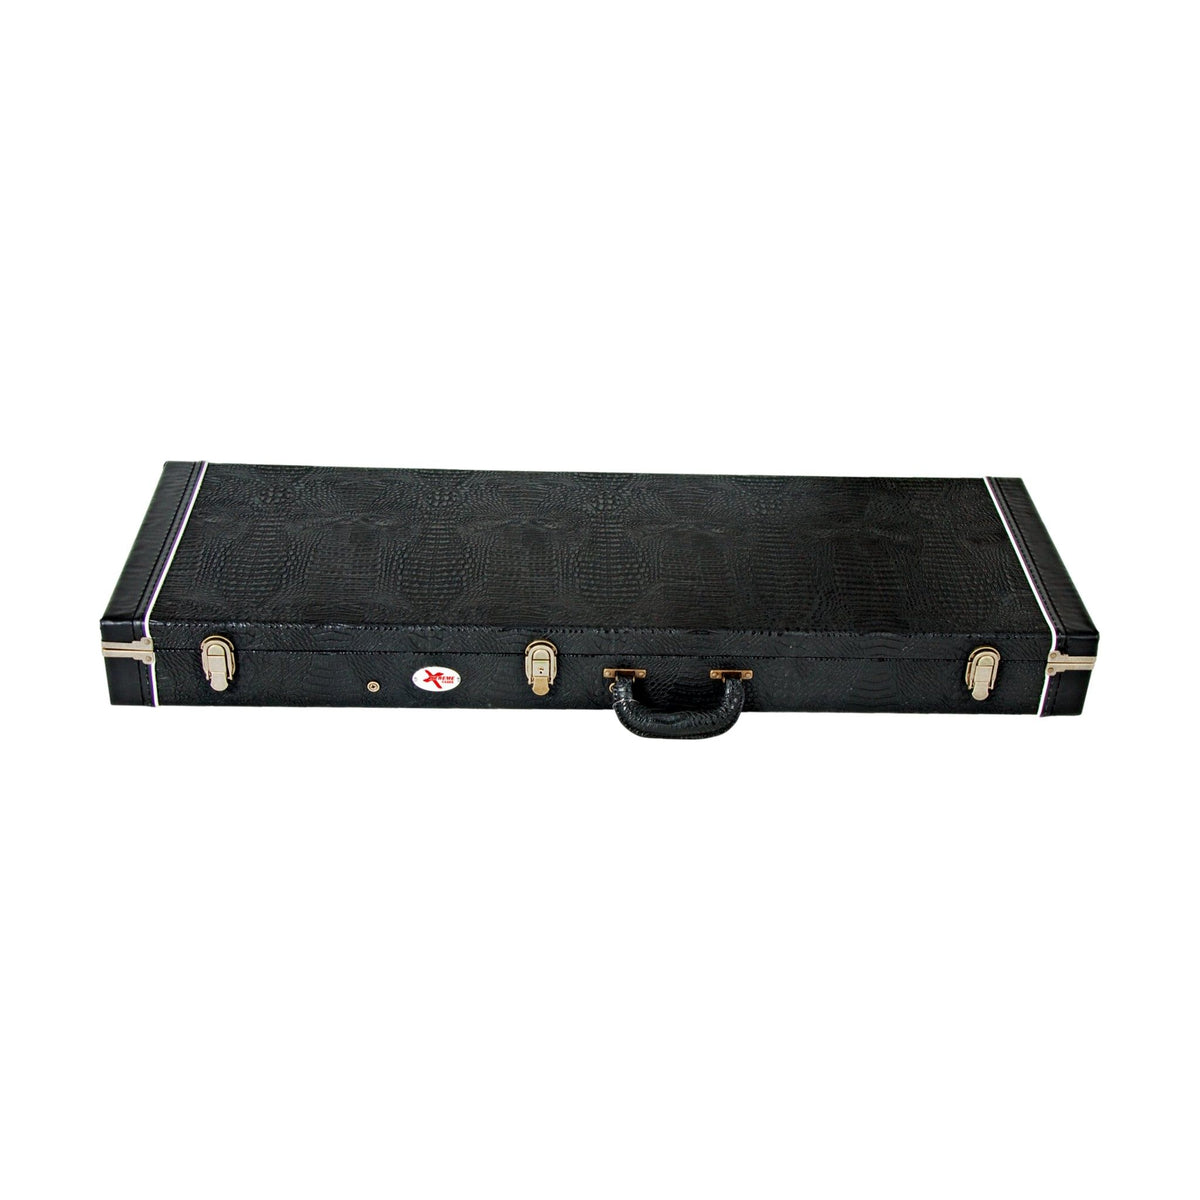 Xtreme Rectangular Electric Guitar Hardcase for Strat or Tele